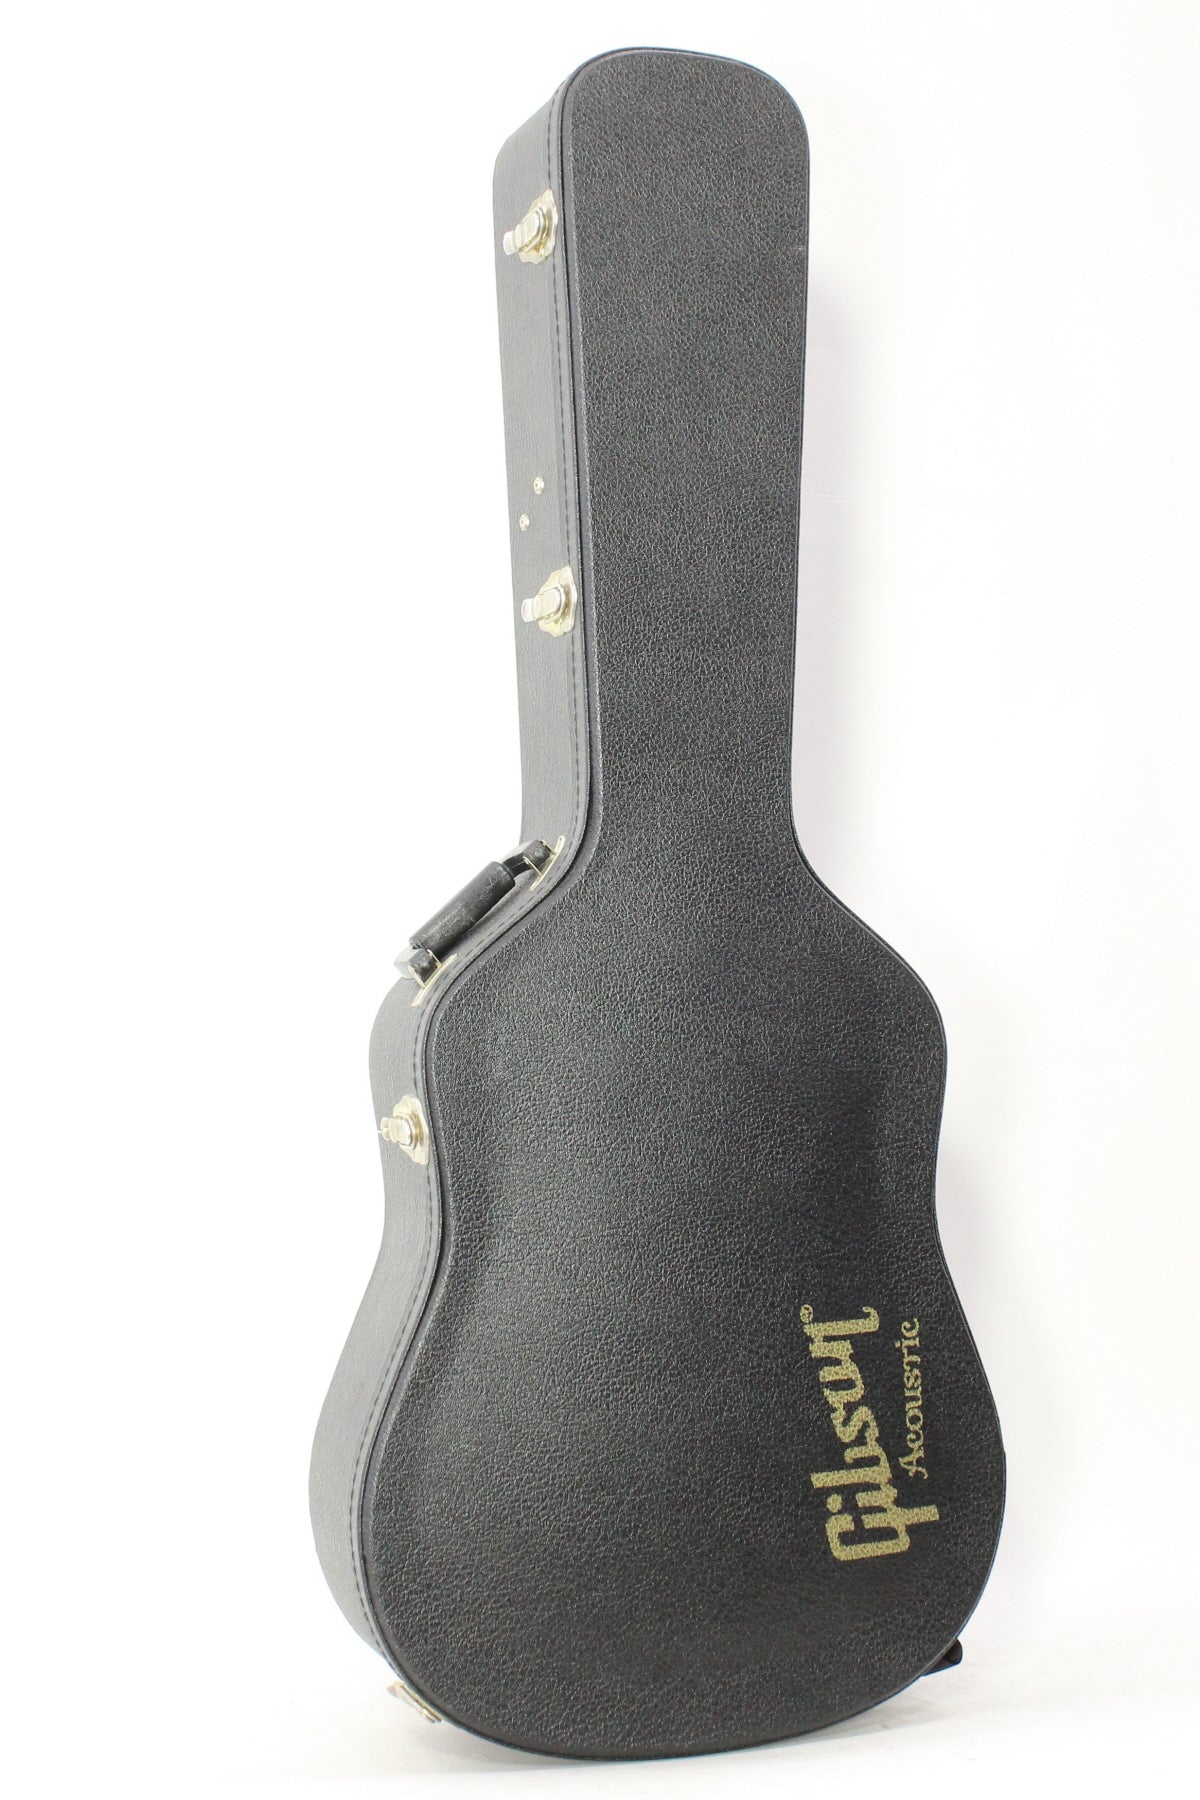 [SN 13236033] USED Gibson Montana / Hummingbird Heritage Cherry Sunburst [06]